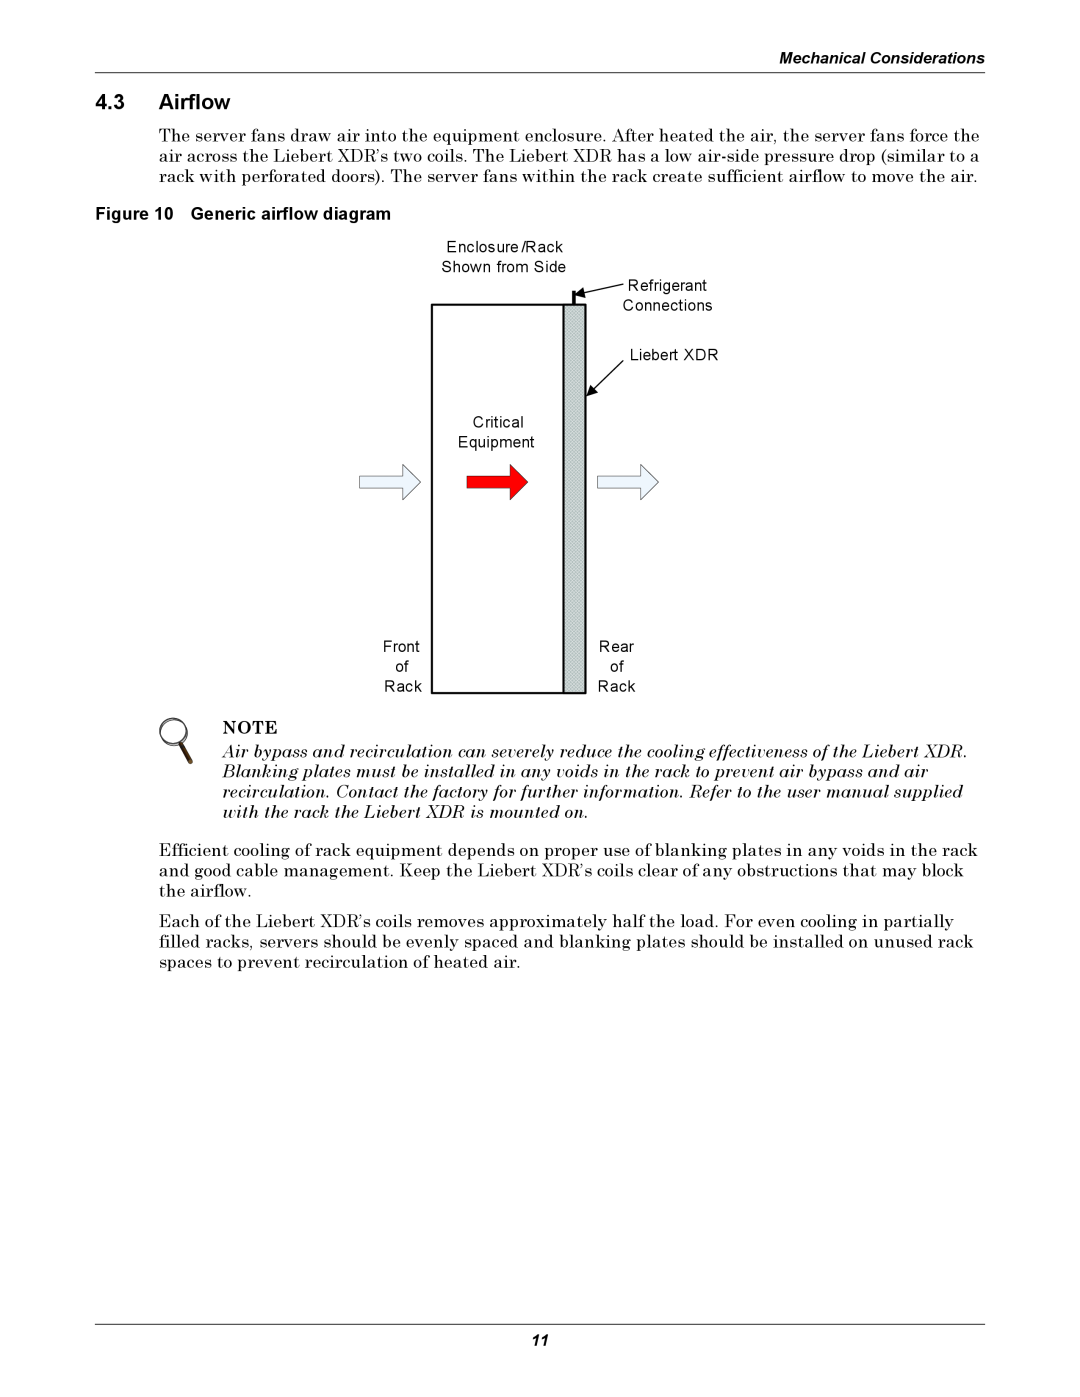 Emerson XDR user manual 4.3Airflow, Generic airflow diagram 